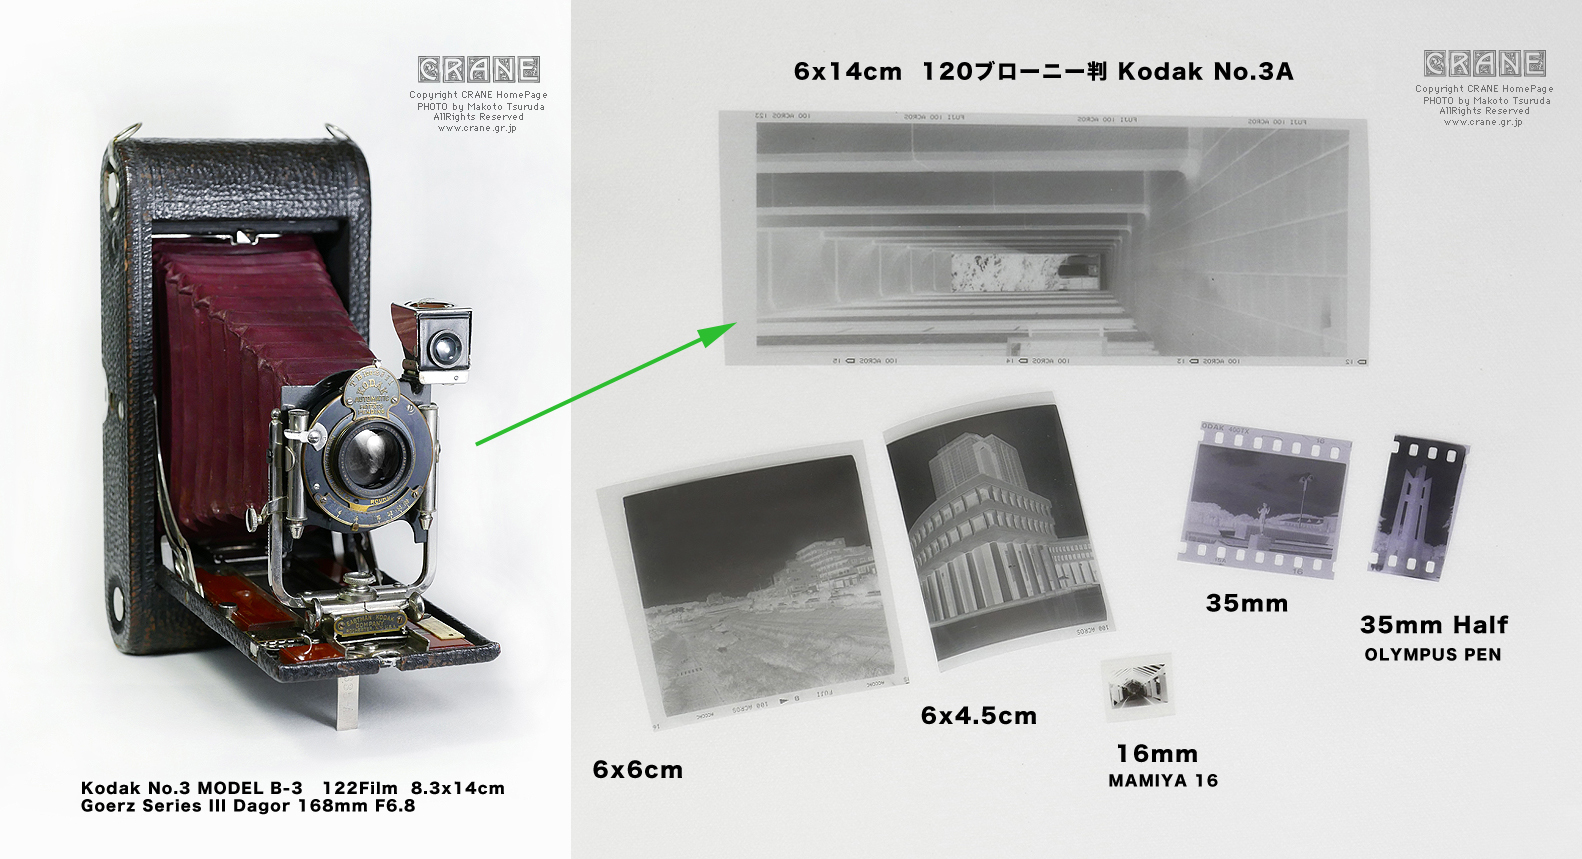 Kodak 3A 6x14cm 120判フィルムカメラ CRANE/私的素敵頁 でっかく撮